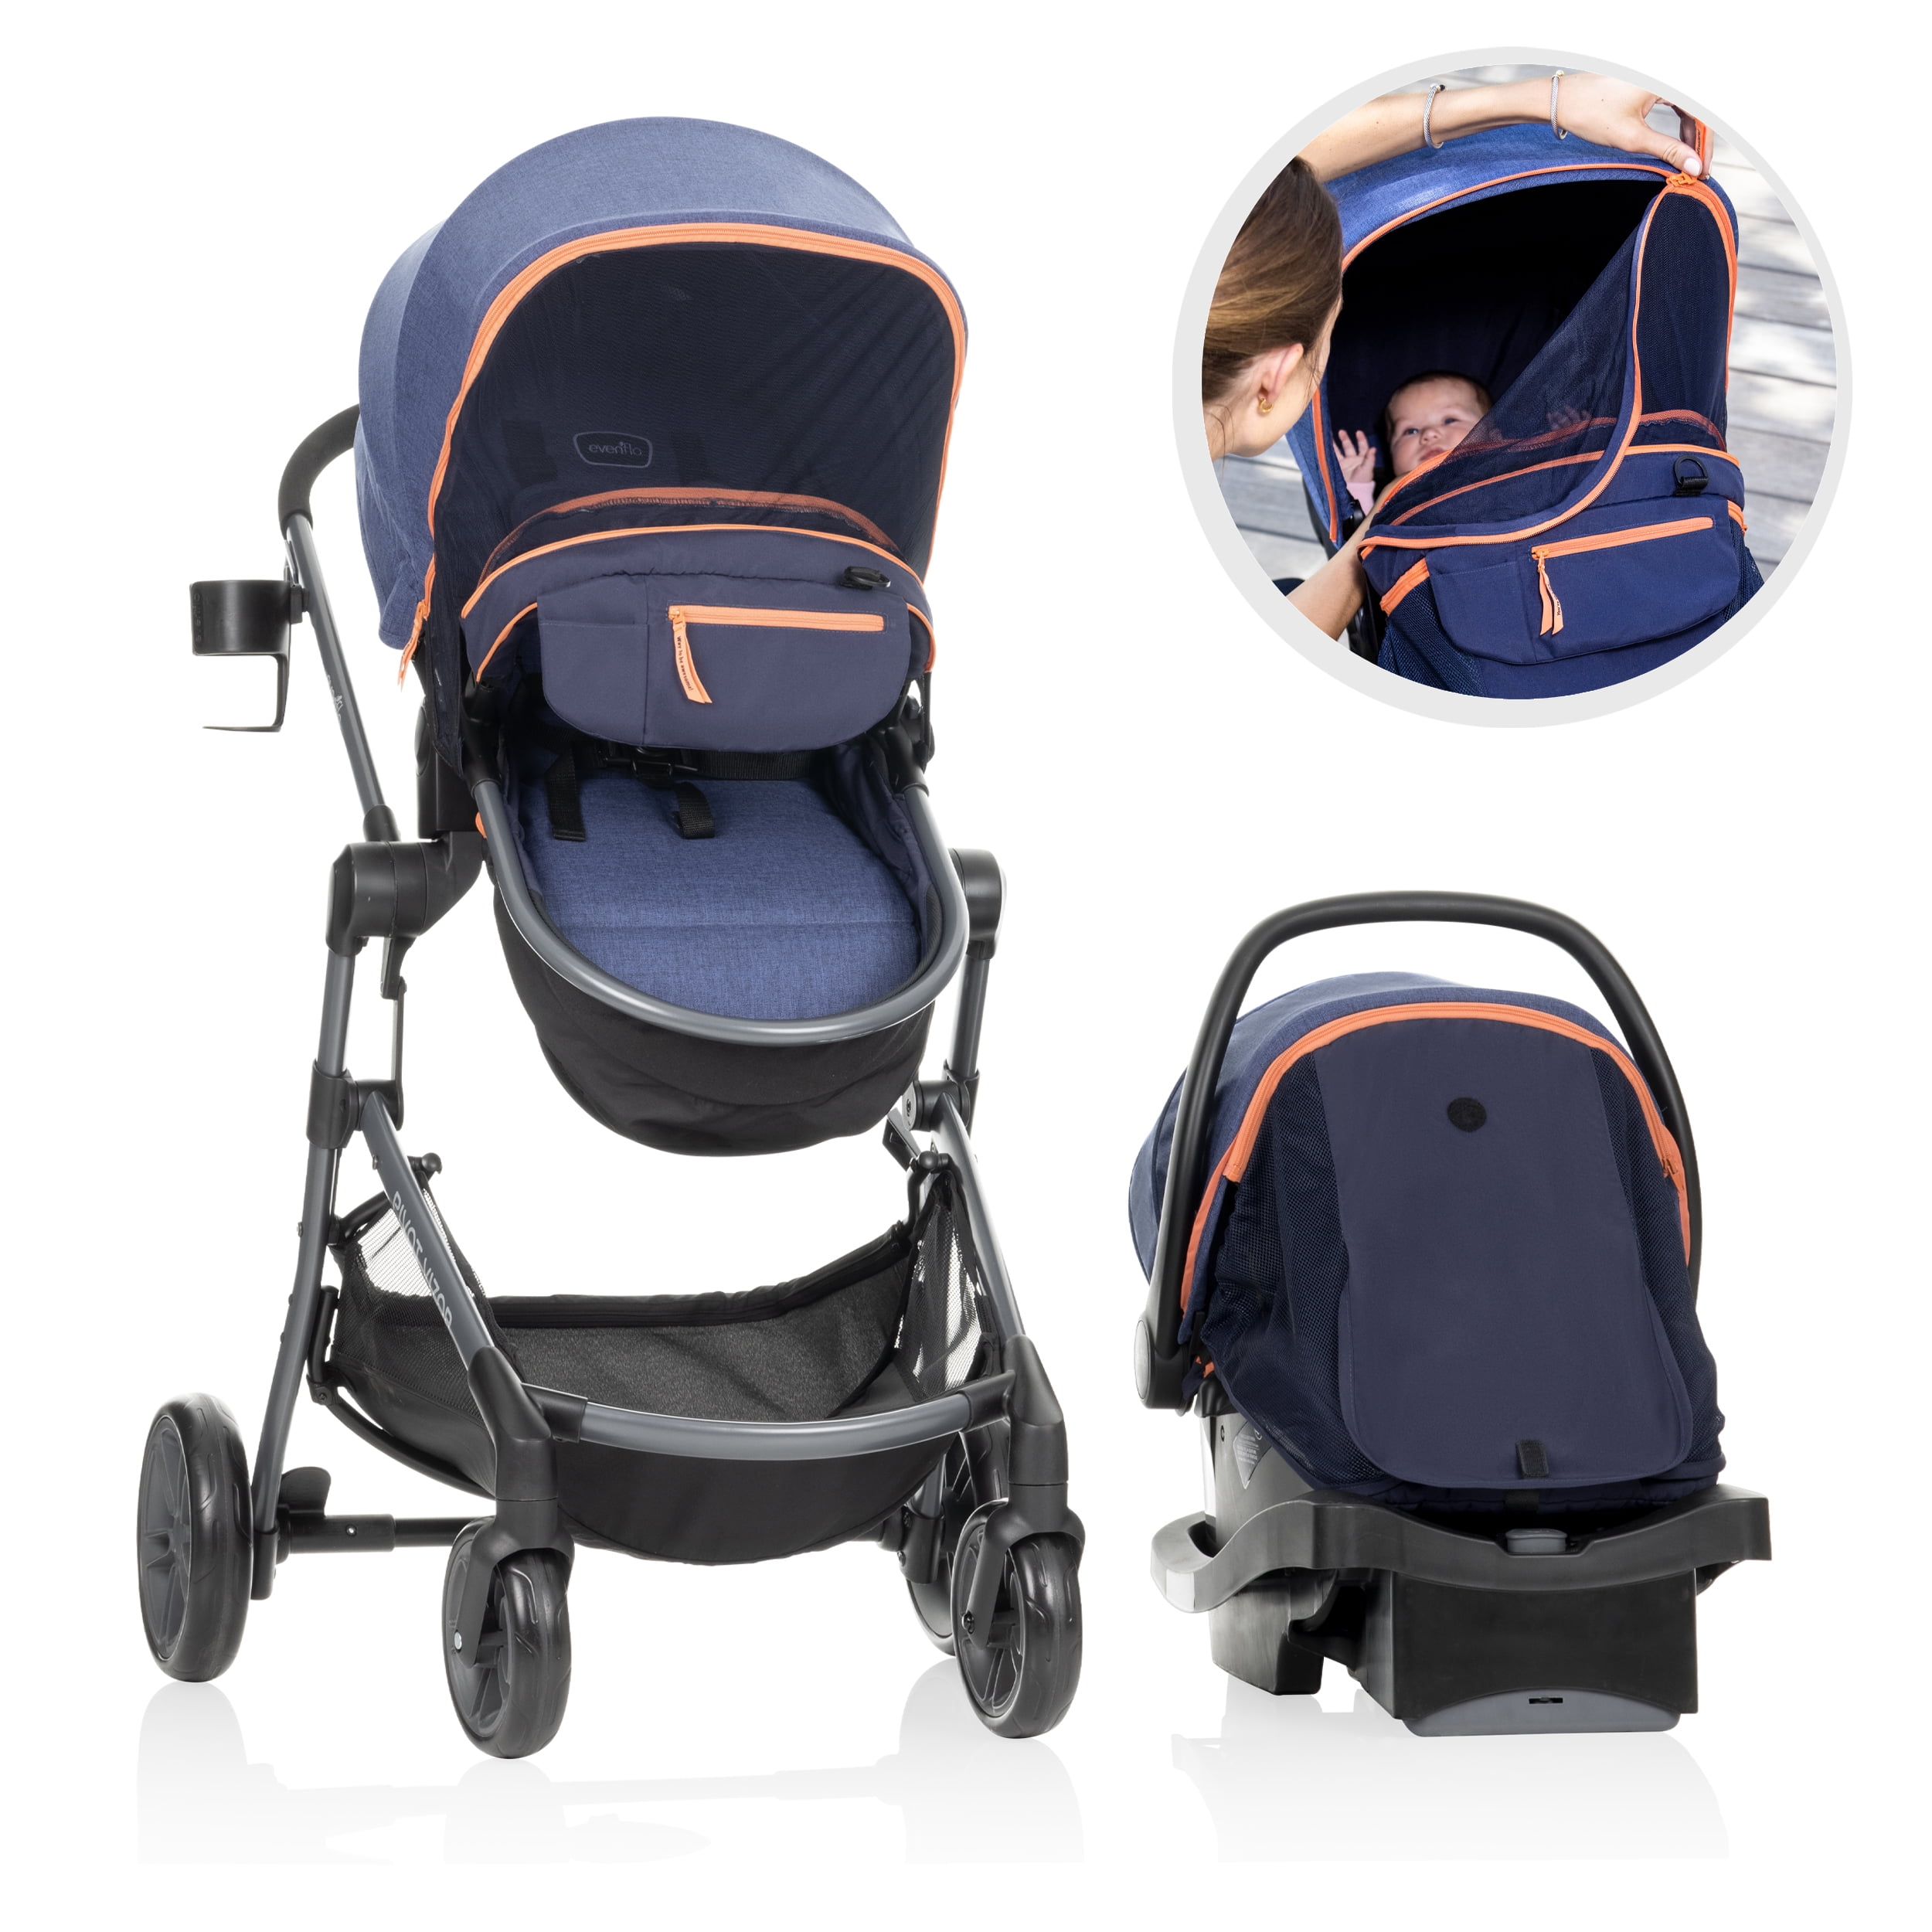 evenflo pivot travel system litemax infant car seat